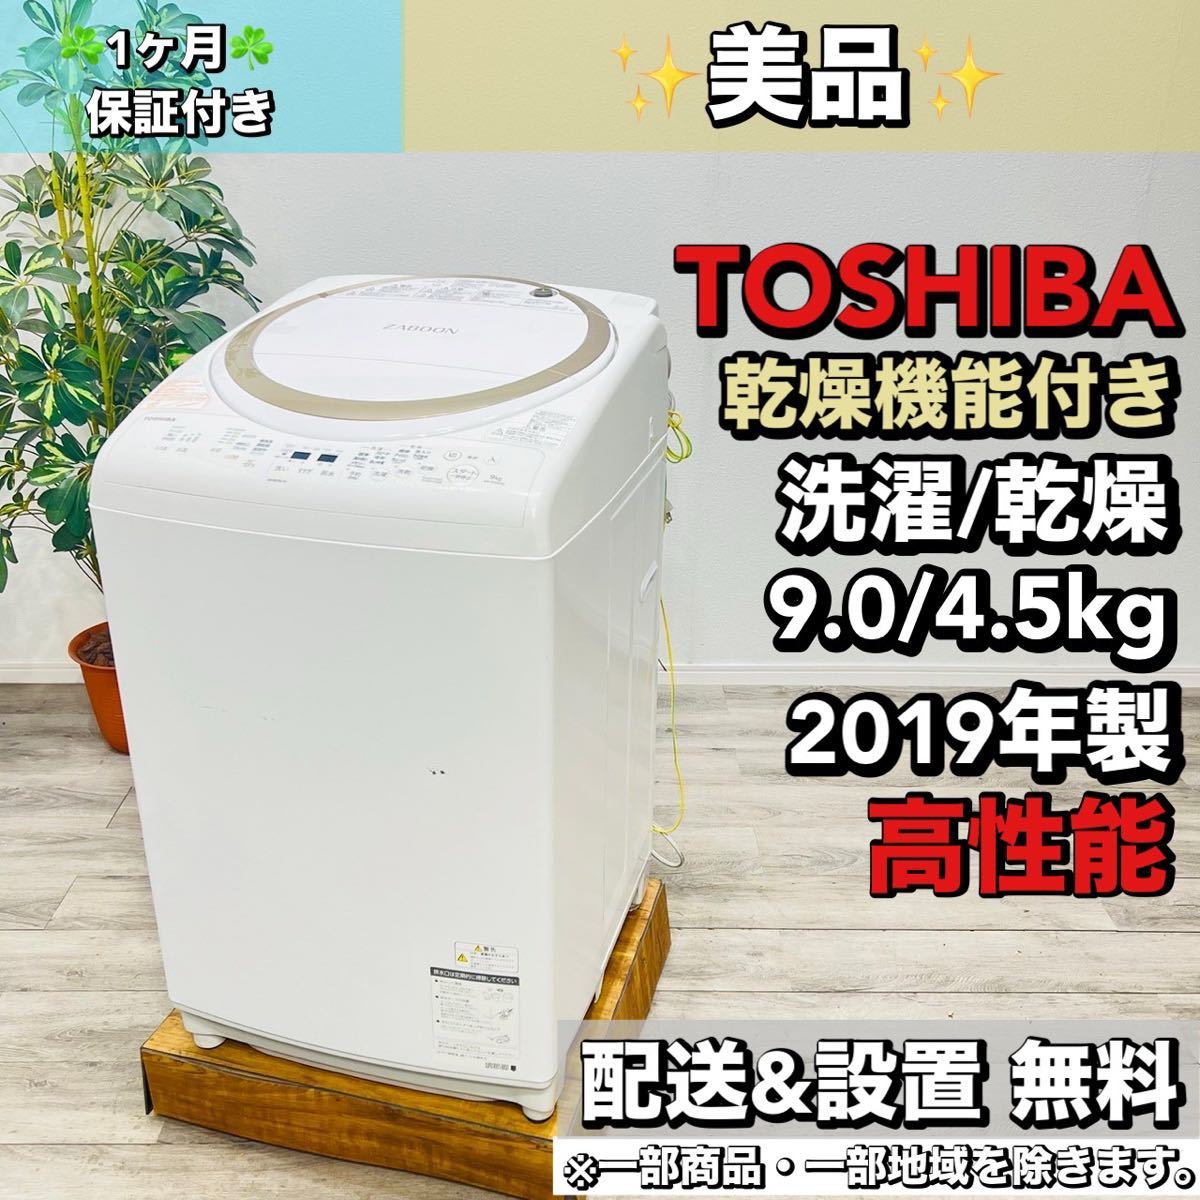 TOSHIBA a1734 洗濯機 9.0kg 2019年製 11